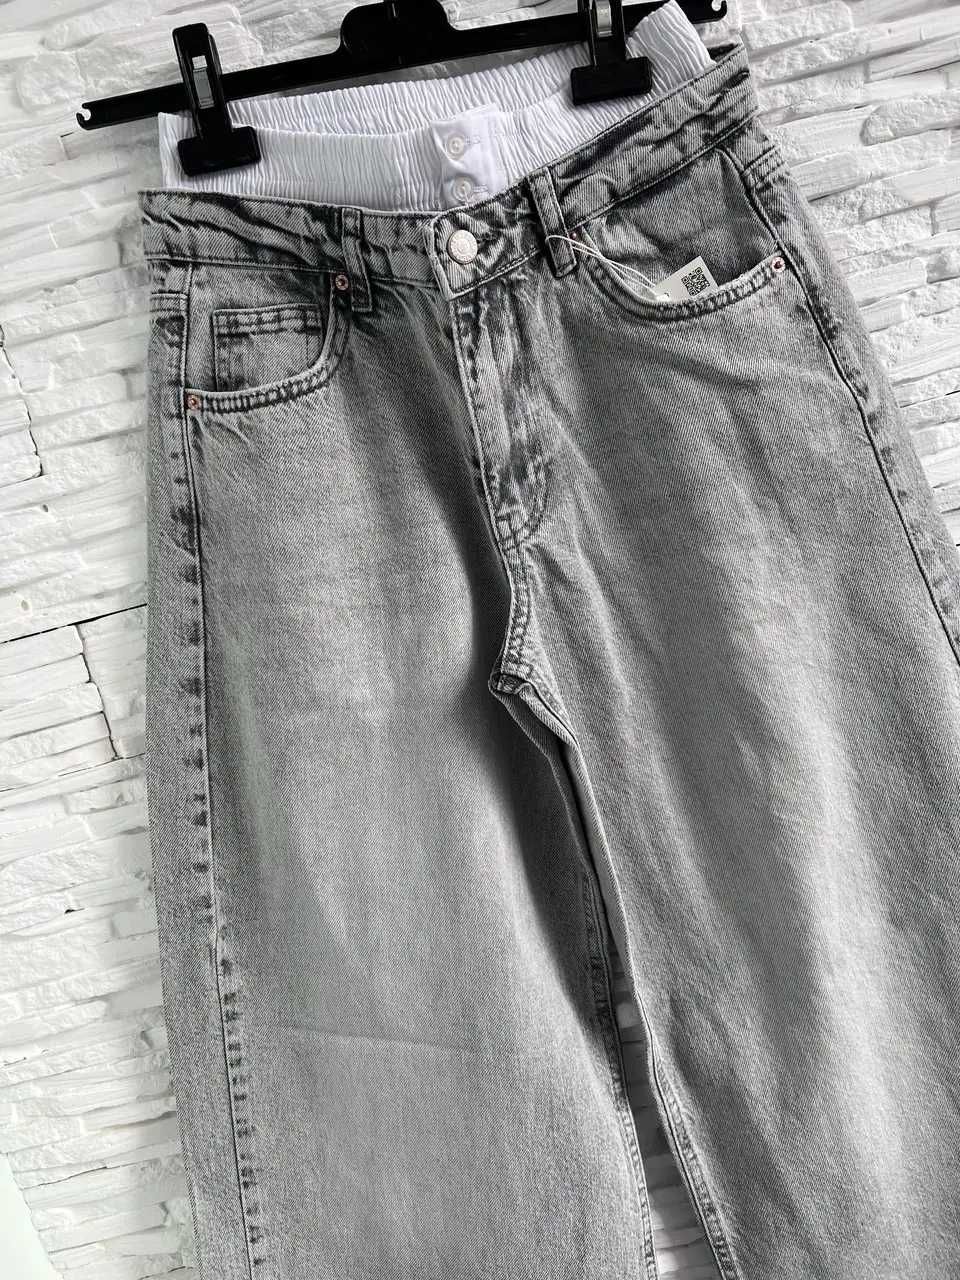 Жіночі широкі джинси палаццо. Джинсы палаццо